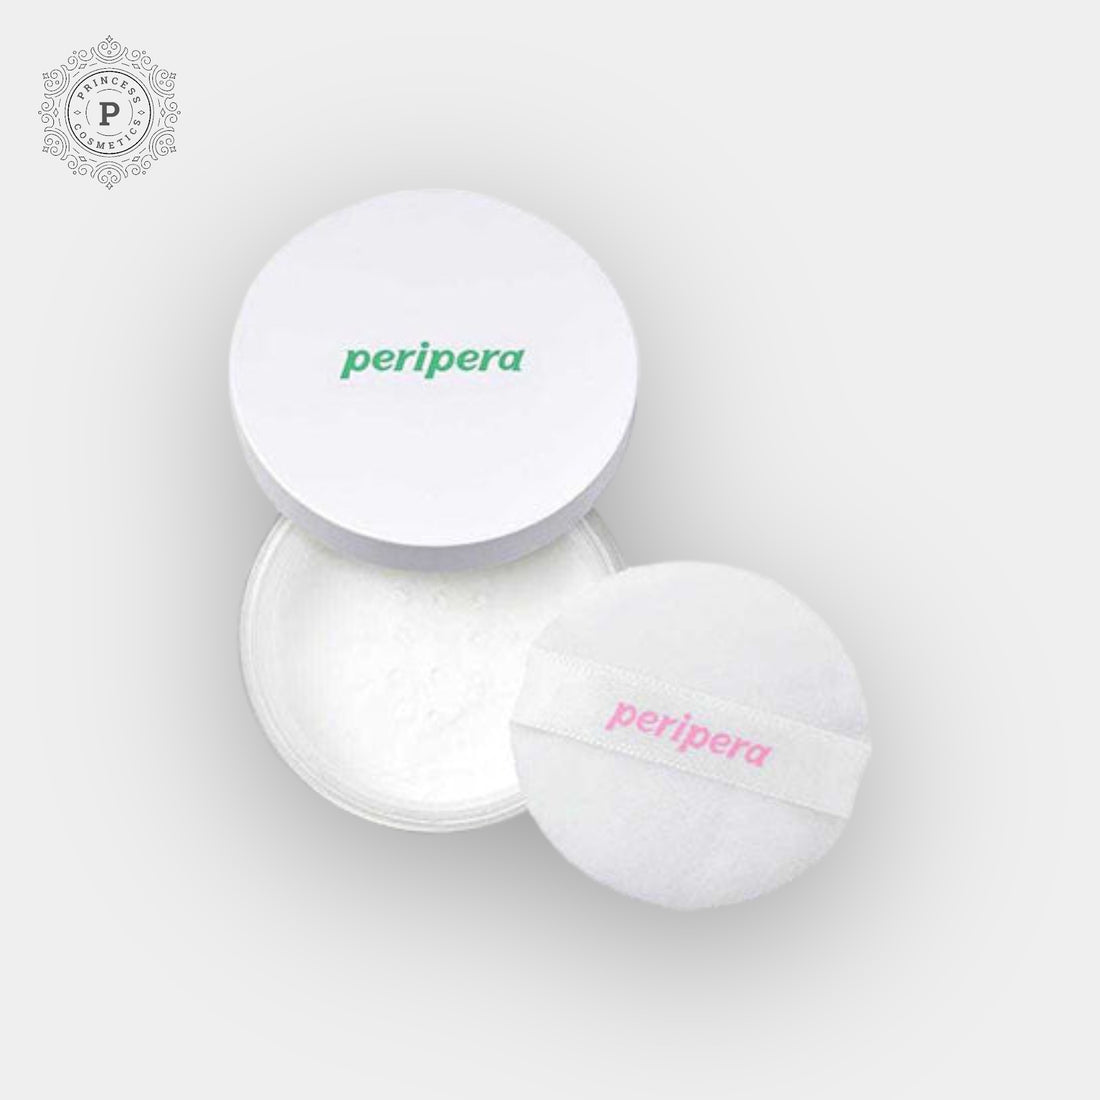 Peripera Oil Capture Priming Powder 8g